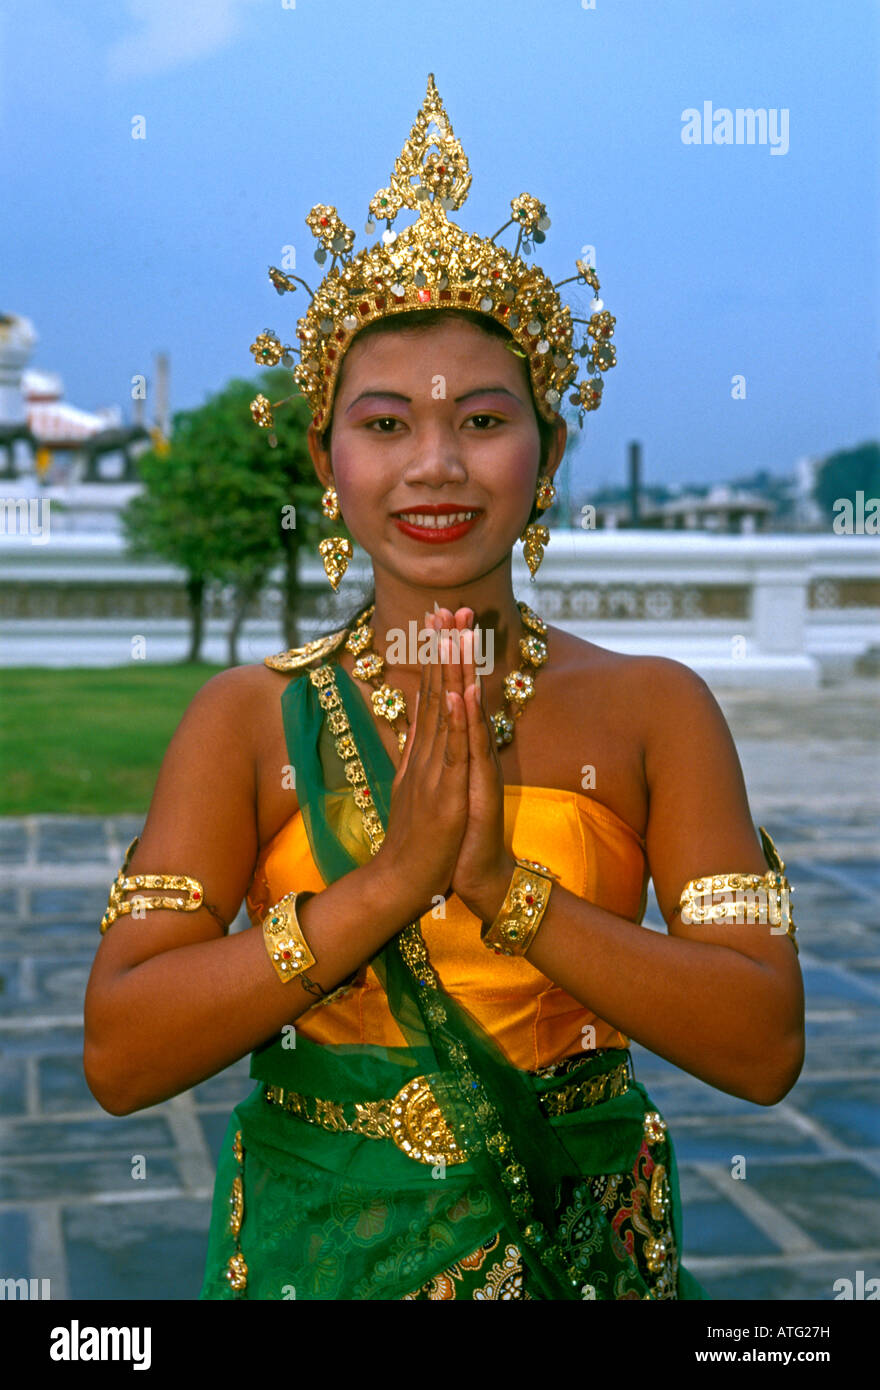 Thai woman, adult woman, traditional costume, headdress, eye contact, front view, portrait, Bangkok, Bangkok Province, Thailand, Southeast Asia, Asia Stock Photo